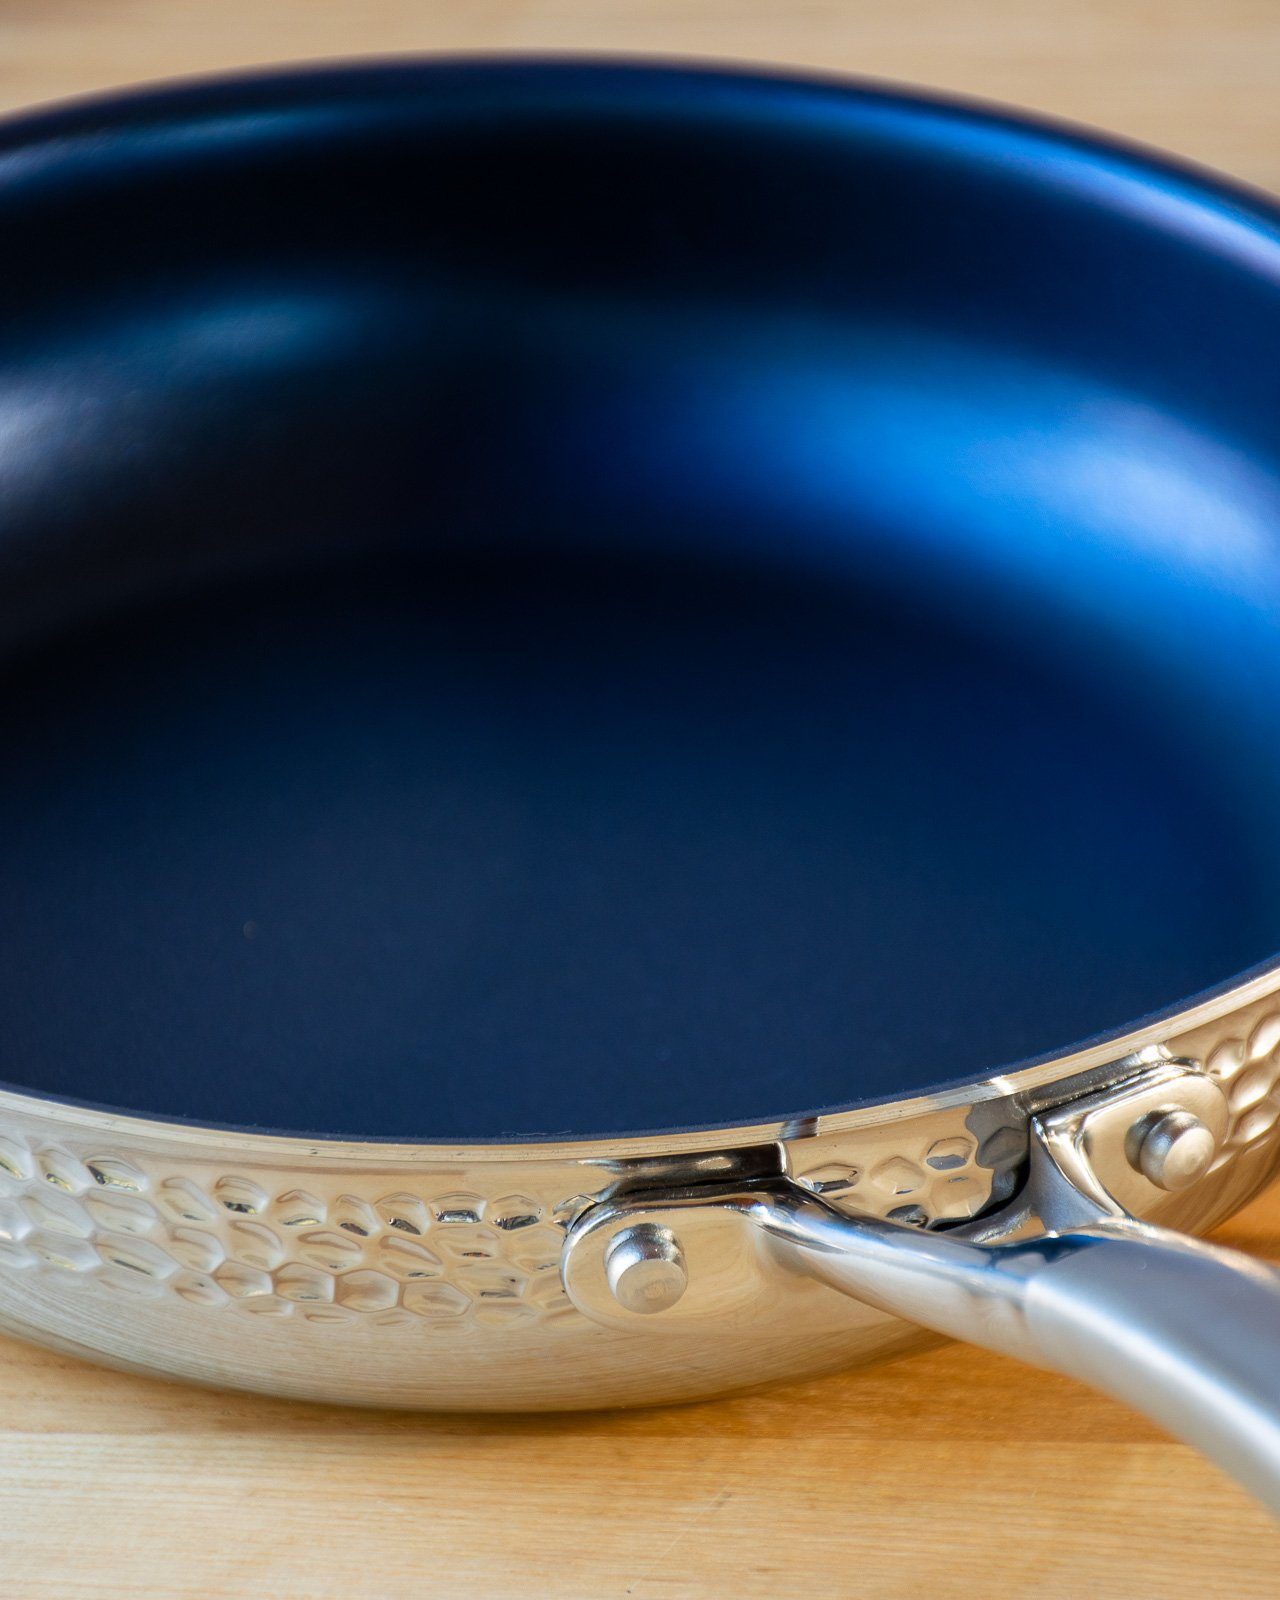 Biltmore Chef Series 3-Piece Ceramic Nonstick Aluminum Frying Pan Set in Blue